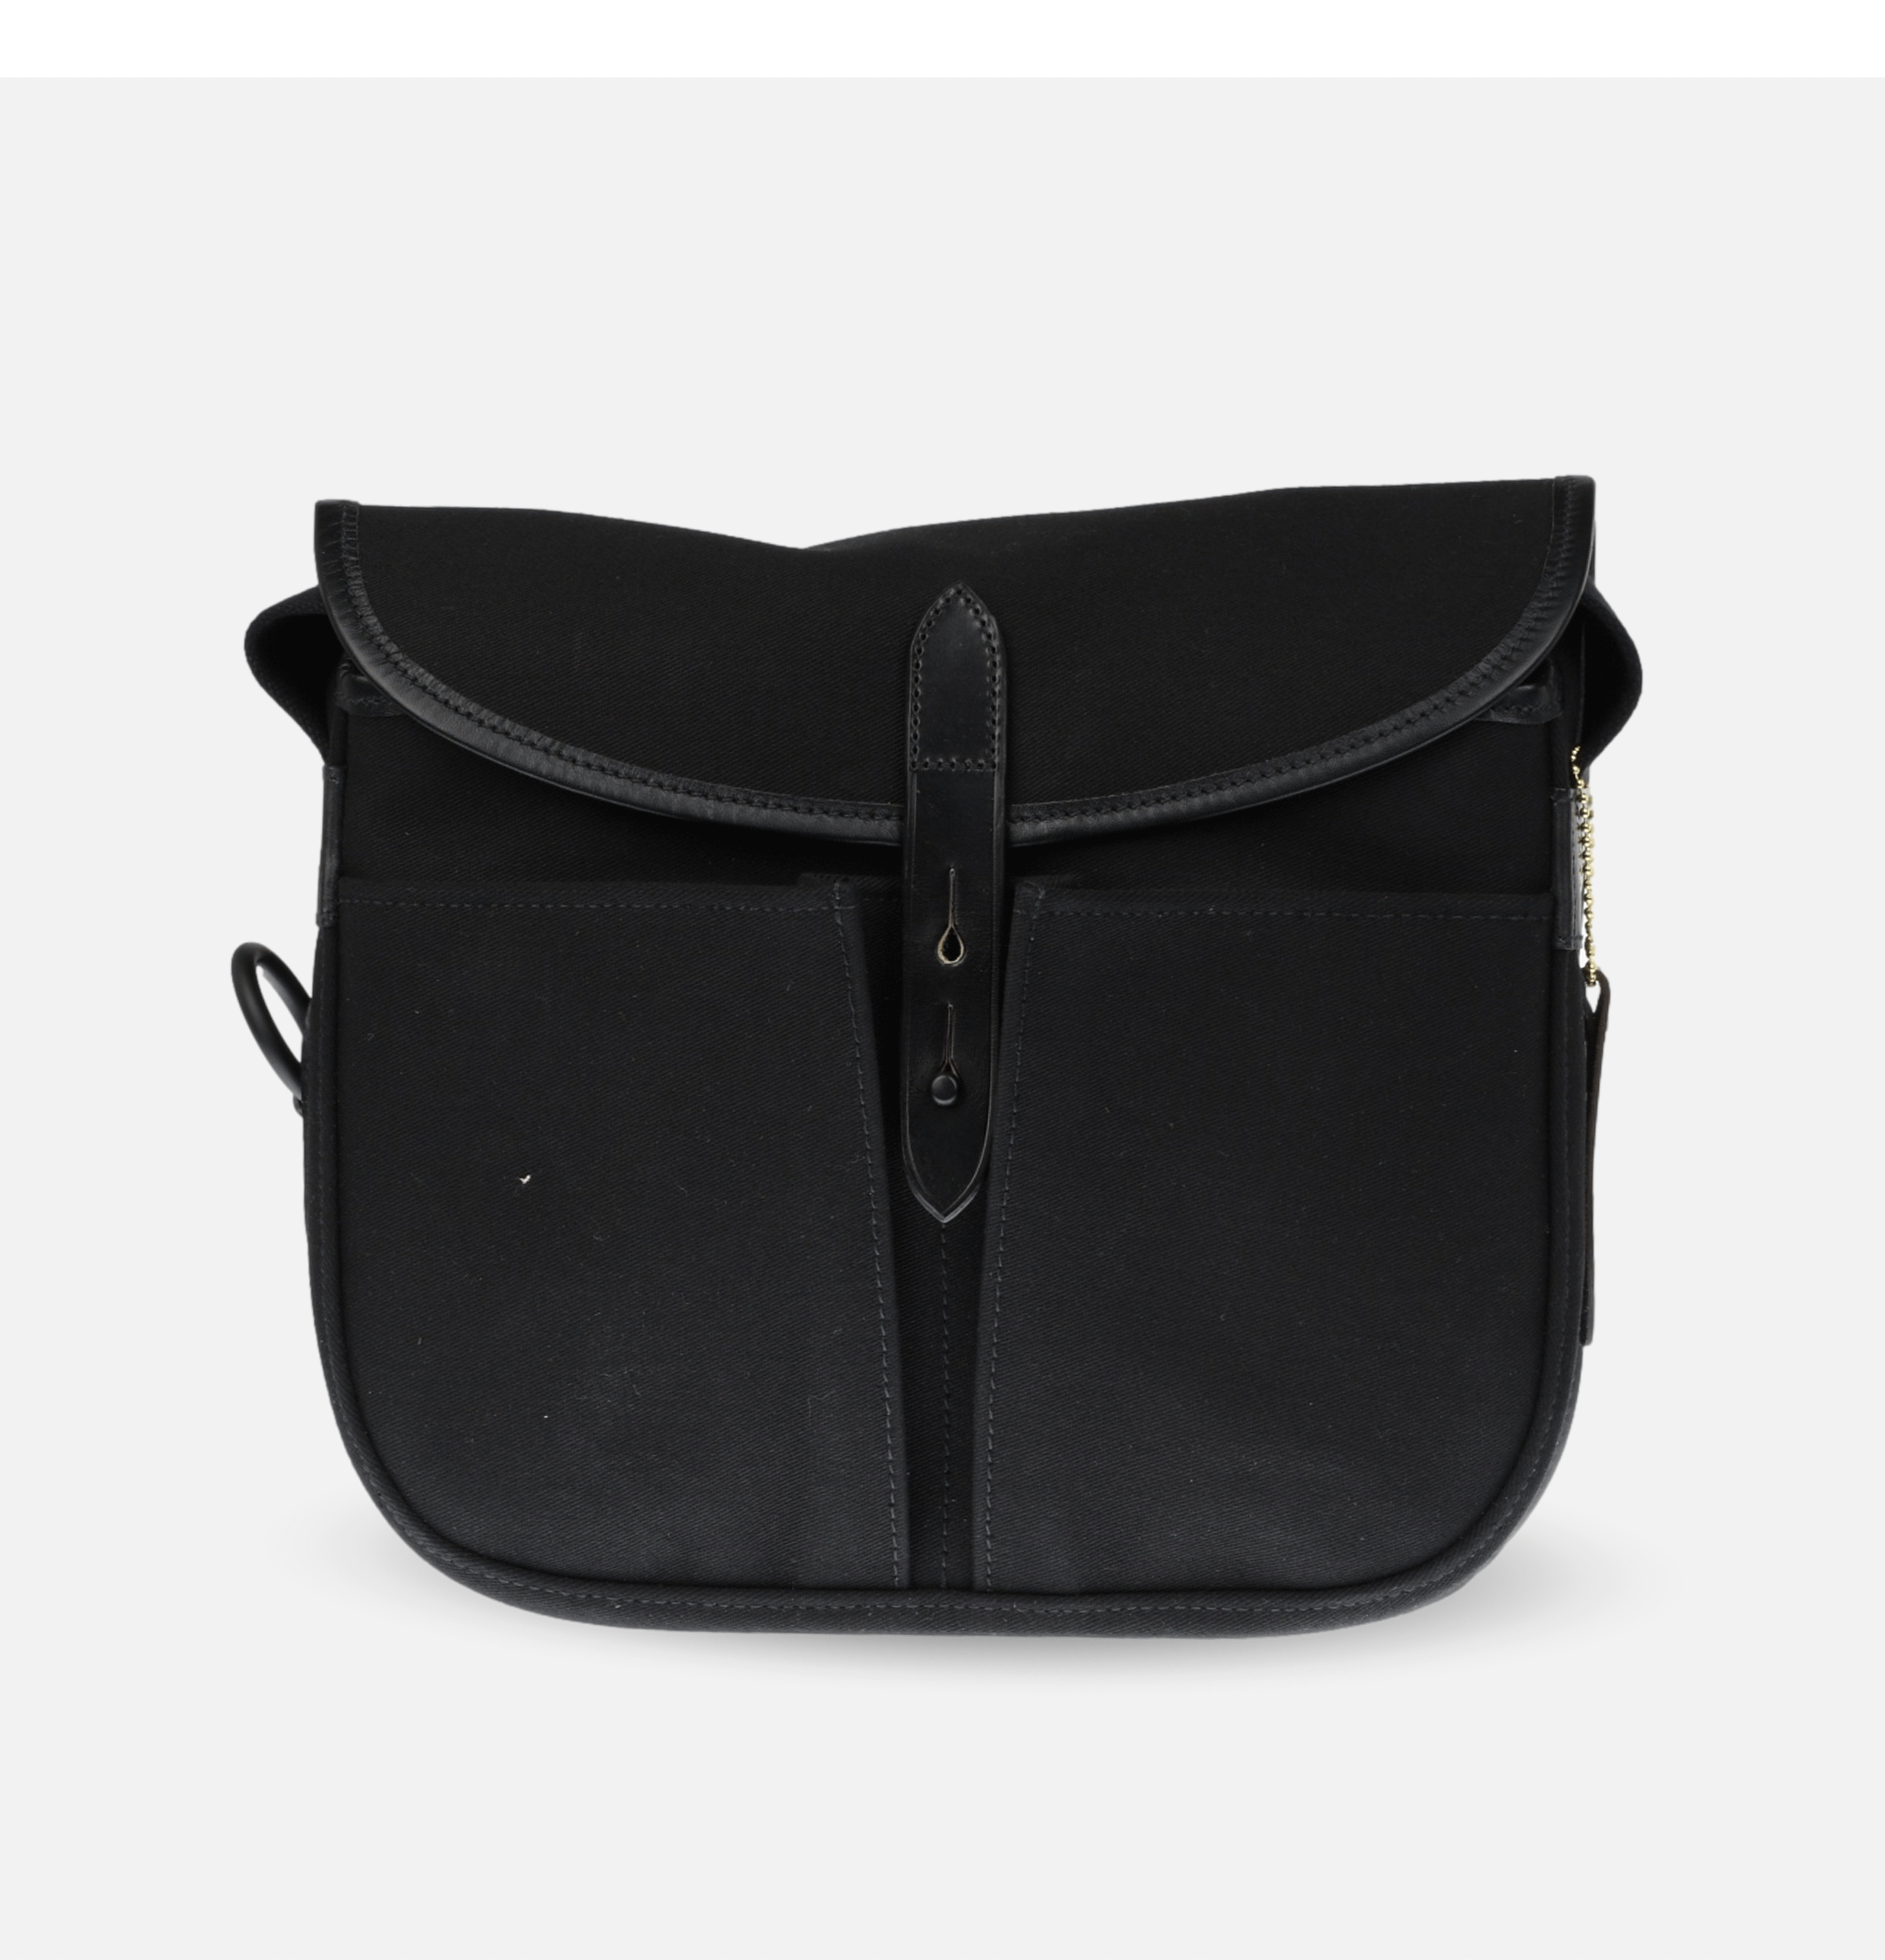 Brady Stour Black Edition bag